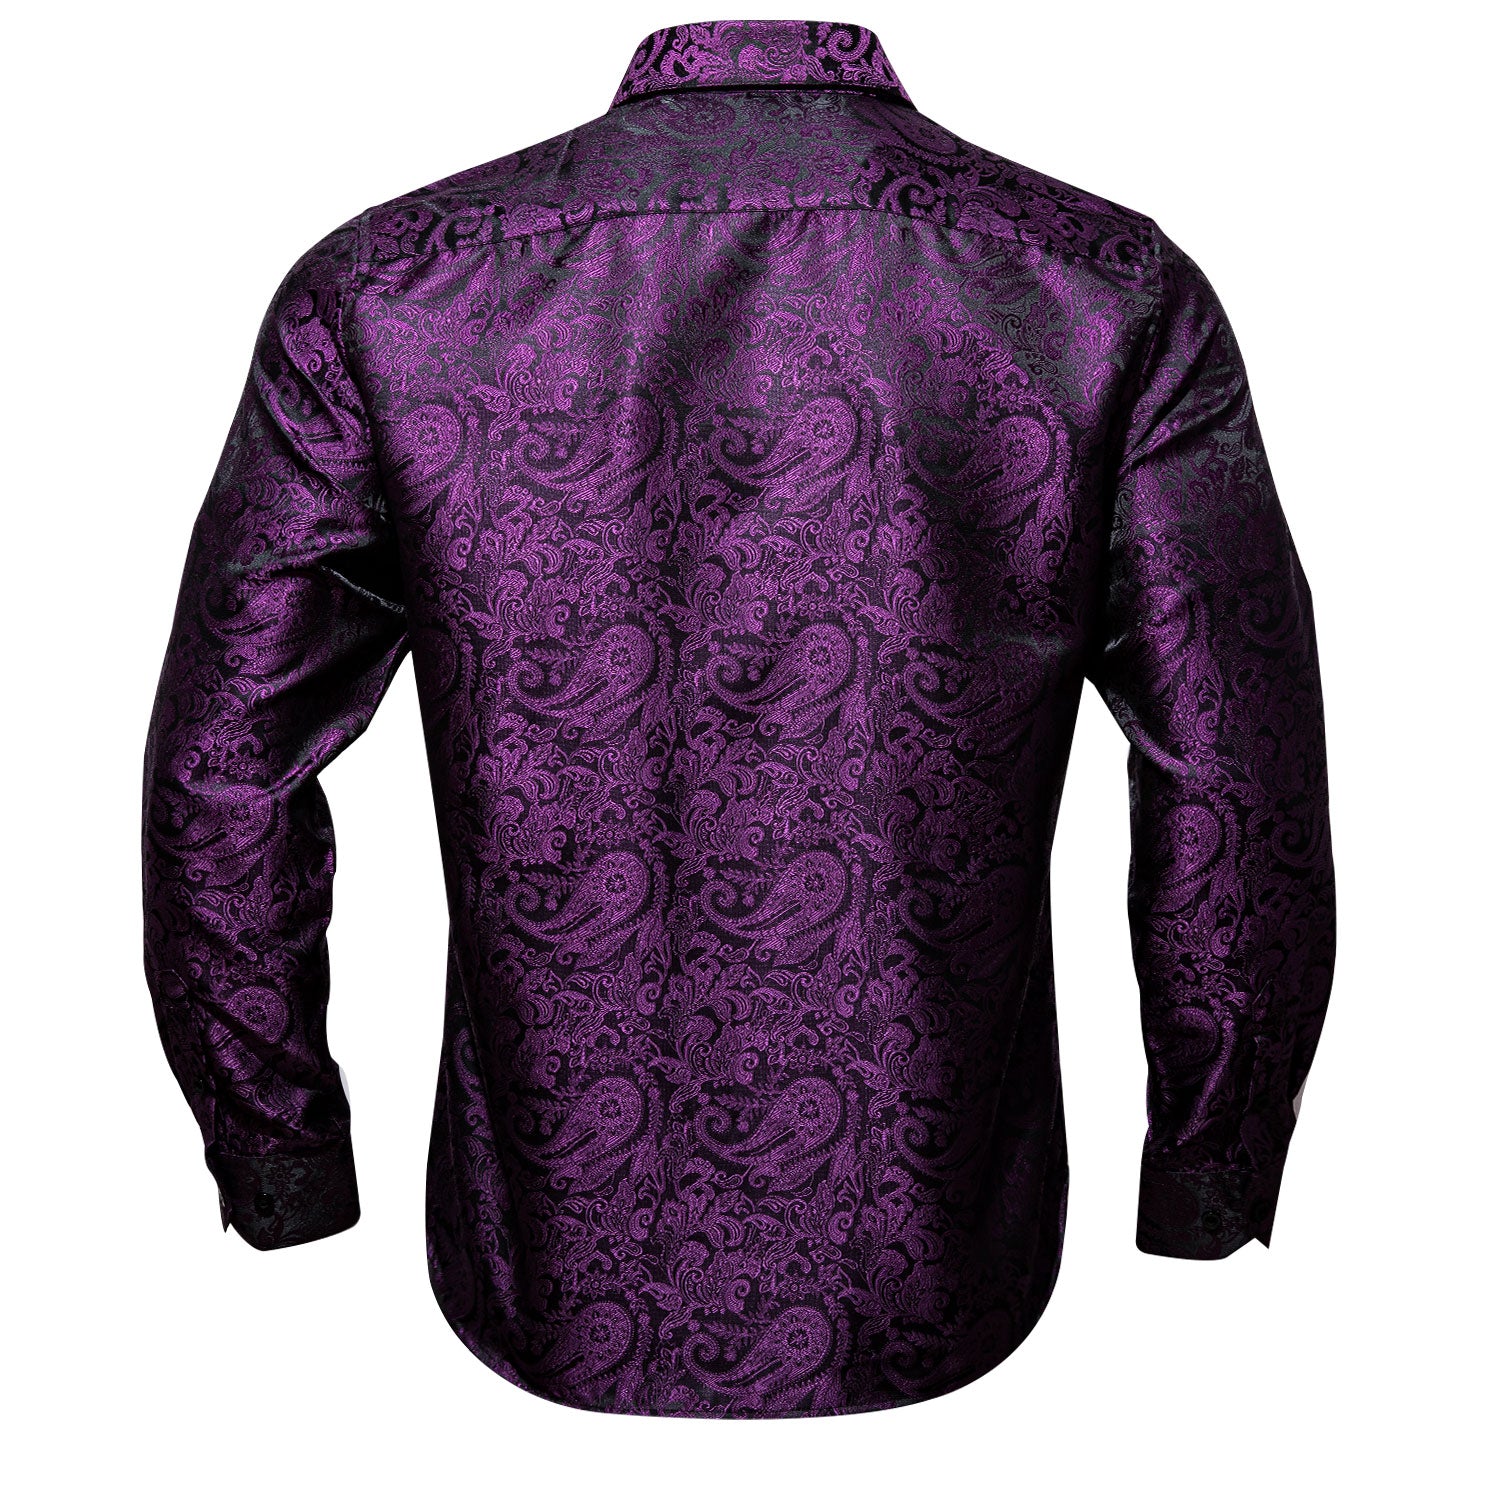 Barry.wang Button Down Shirt Purple Black Paisley Dress Shirt for Men dinner shirts